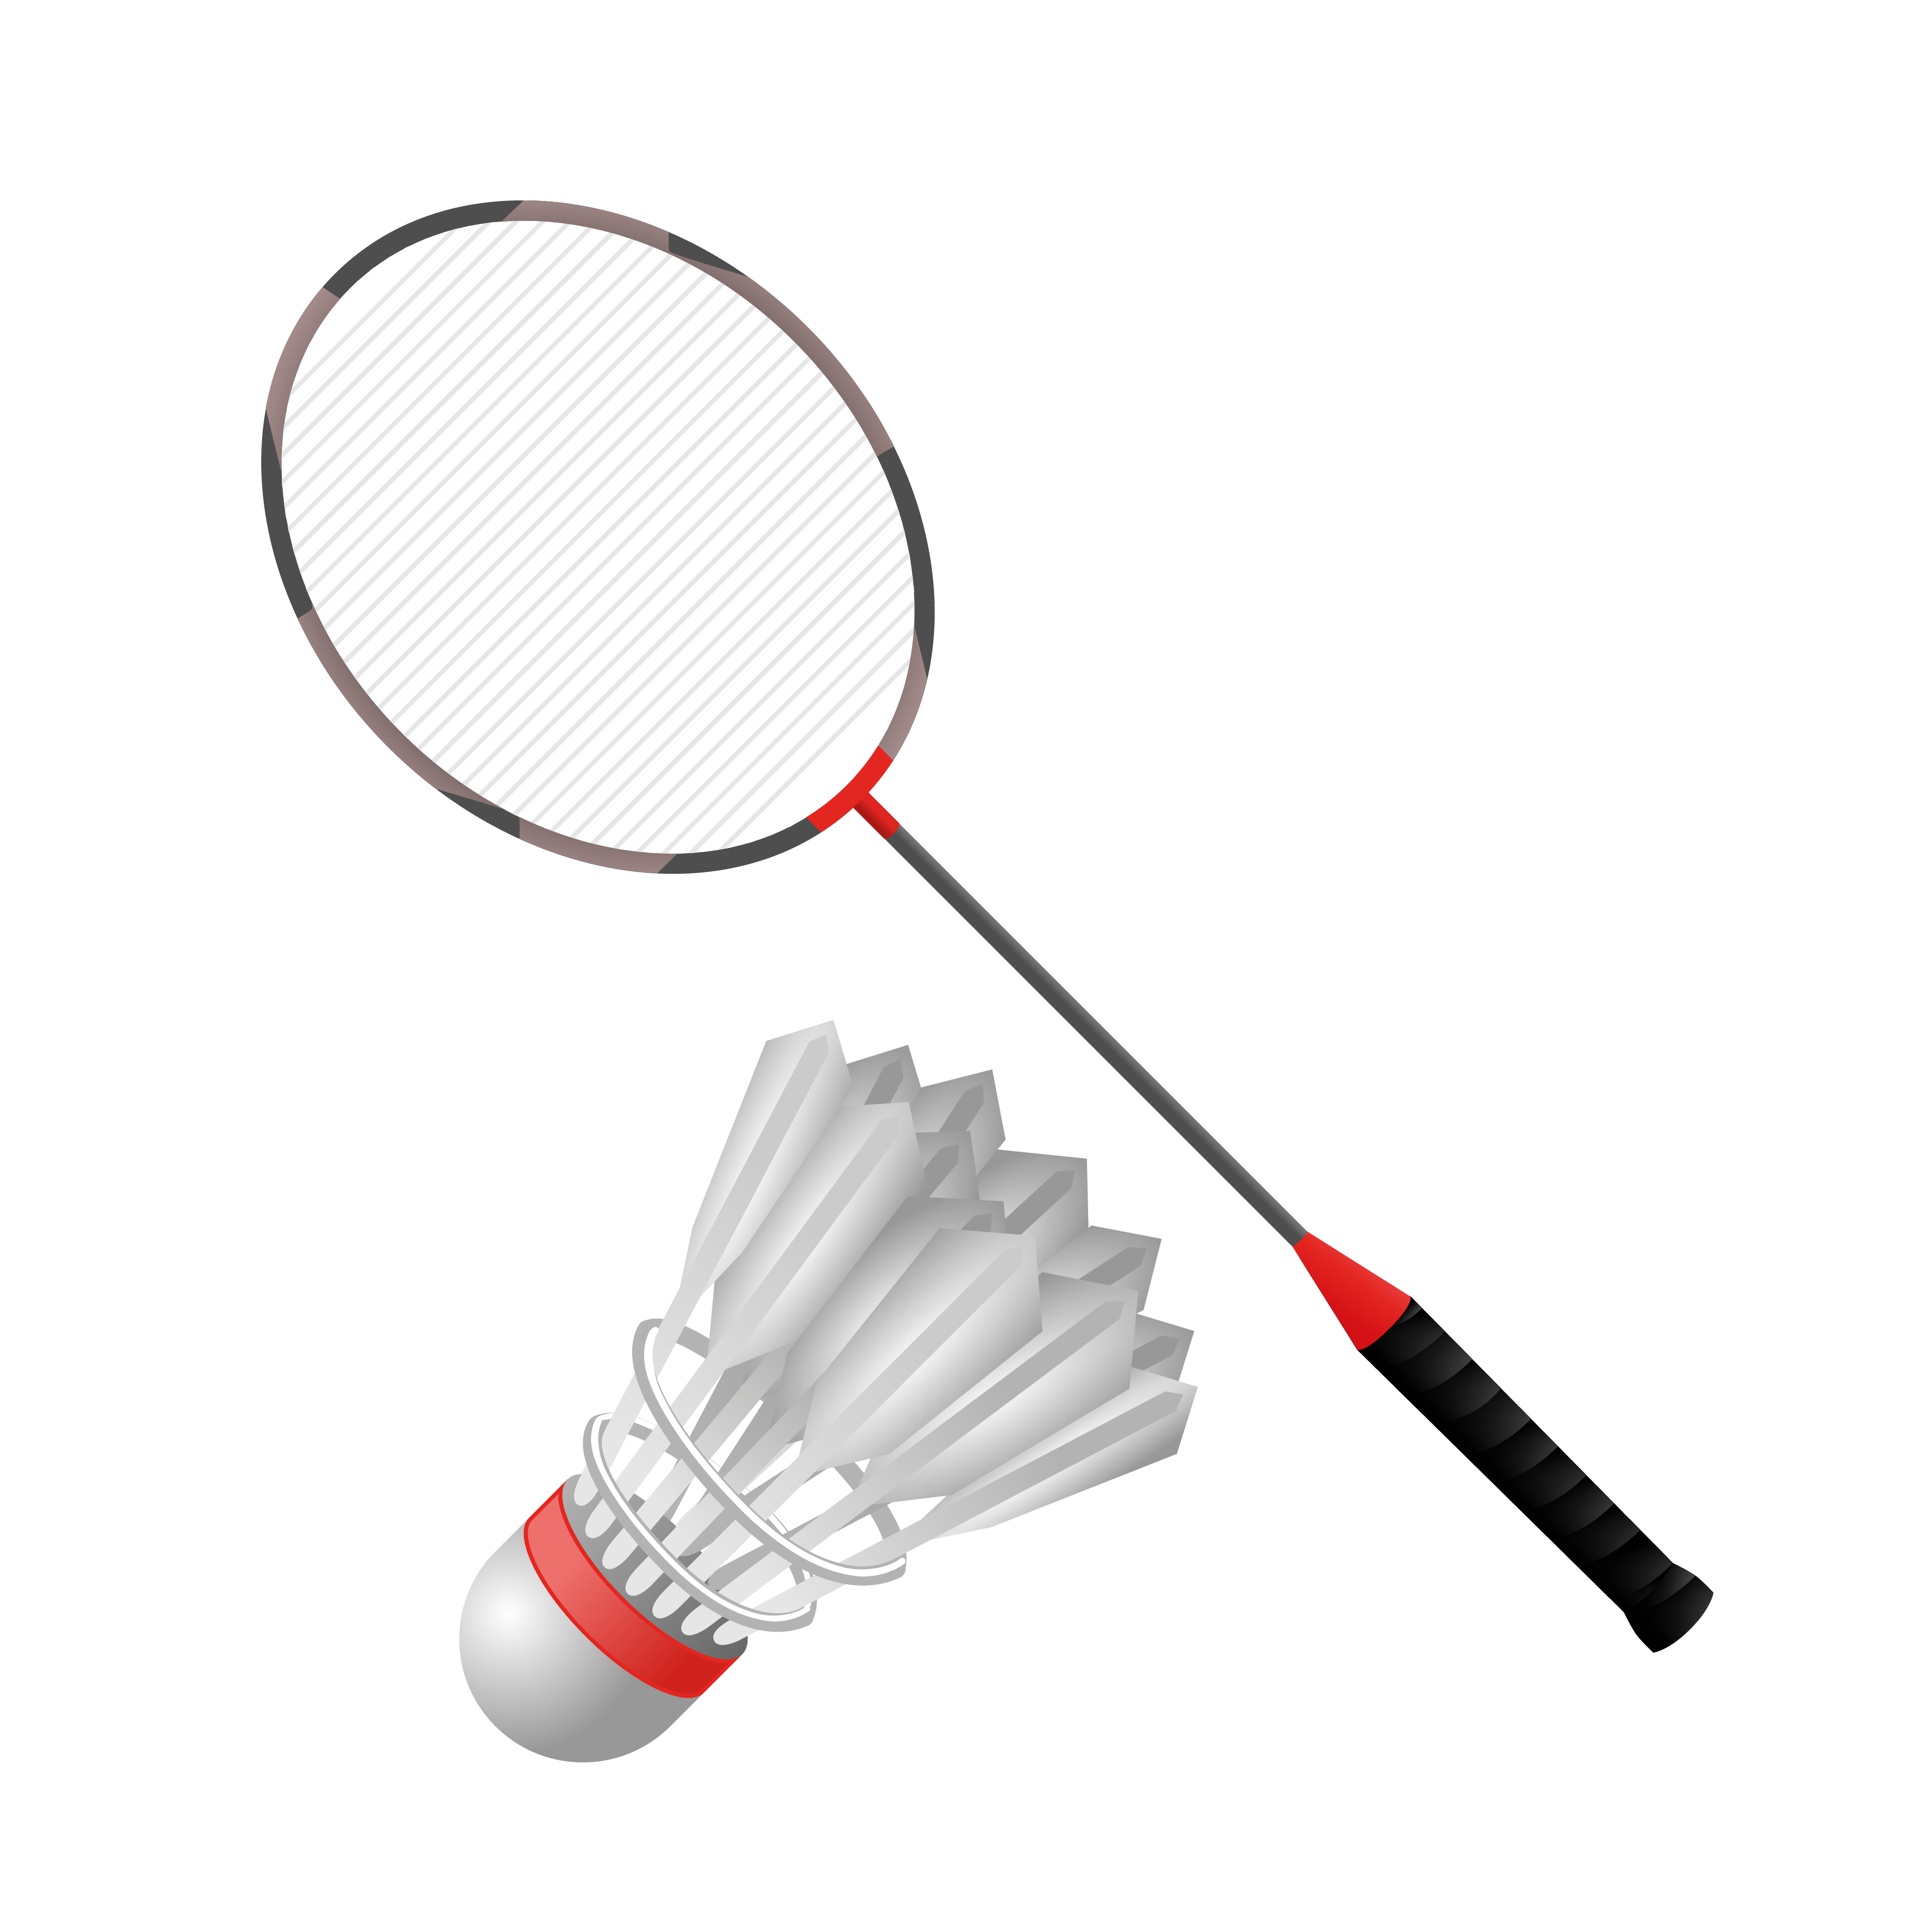 net clipart badminton equipment